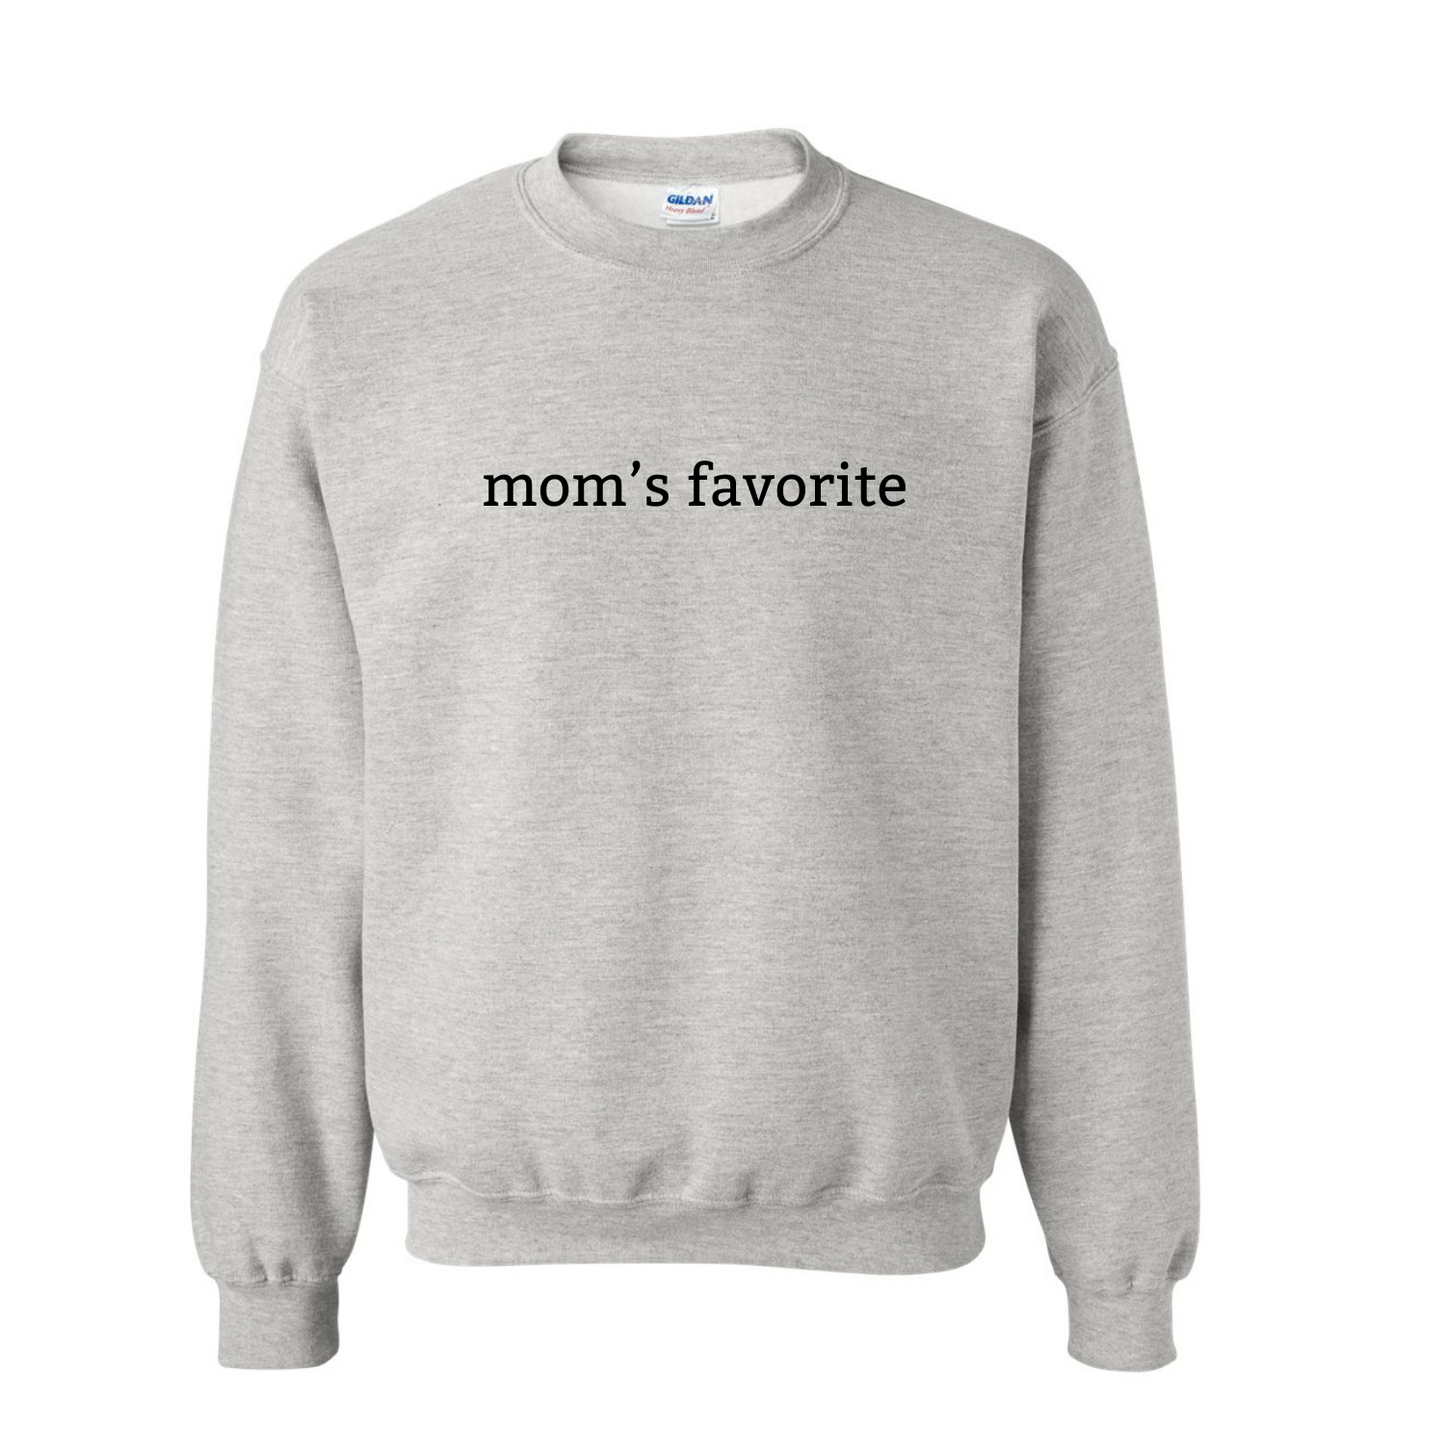 Mom's Favorite / Not Mom's Favorite